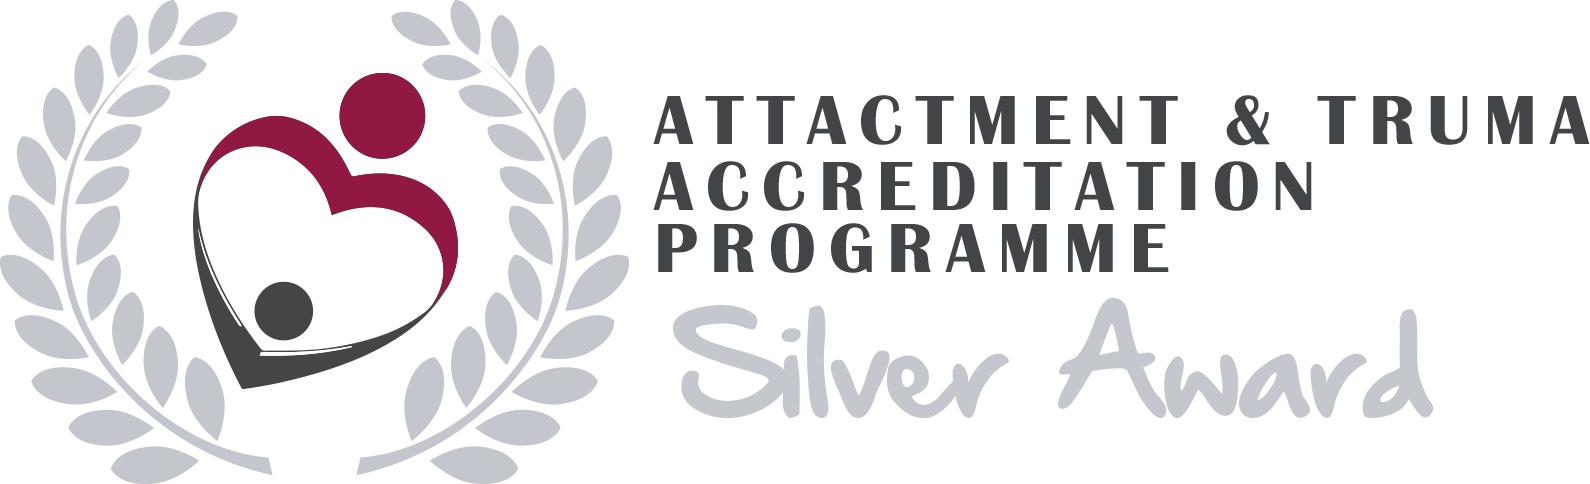 Attachment and Trauma Accreditation Programme Award